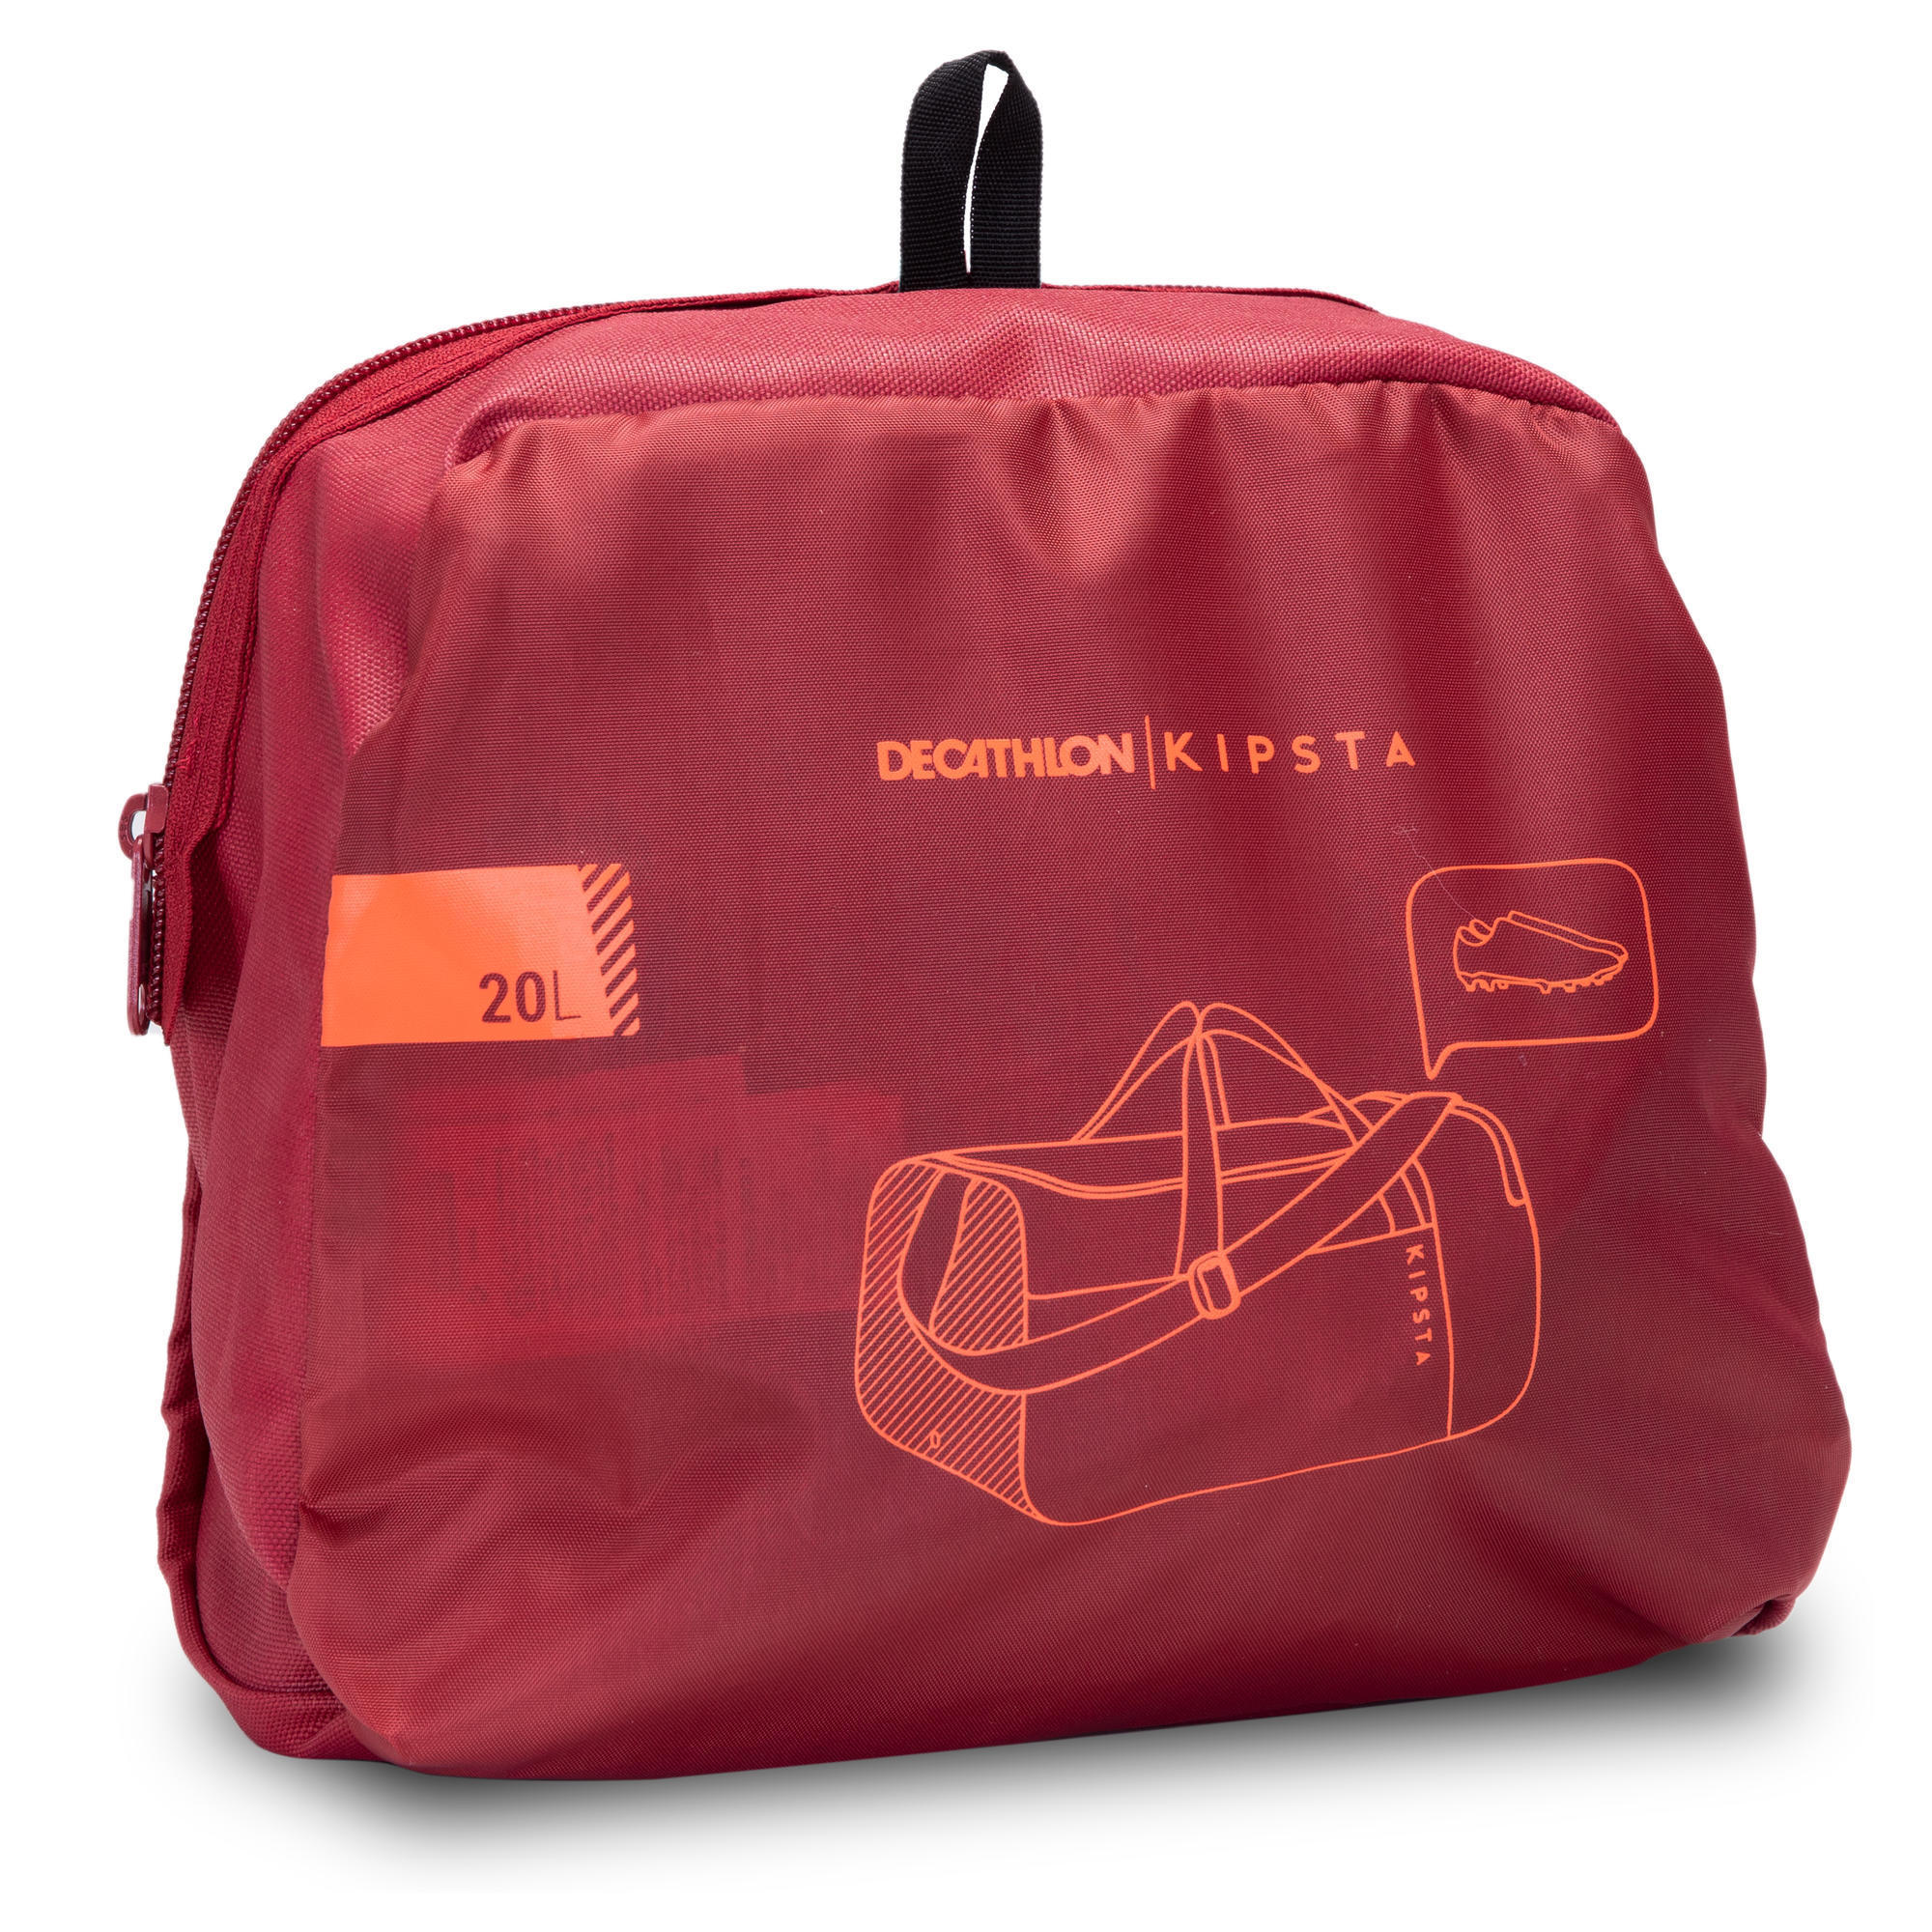 decathlon kipsta bag